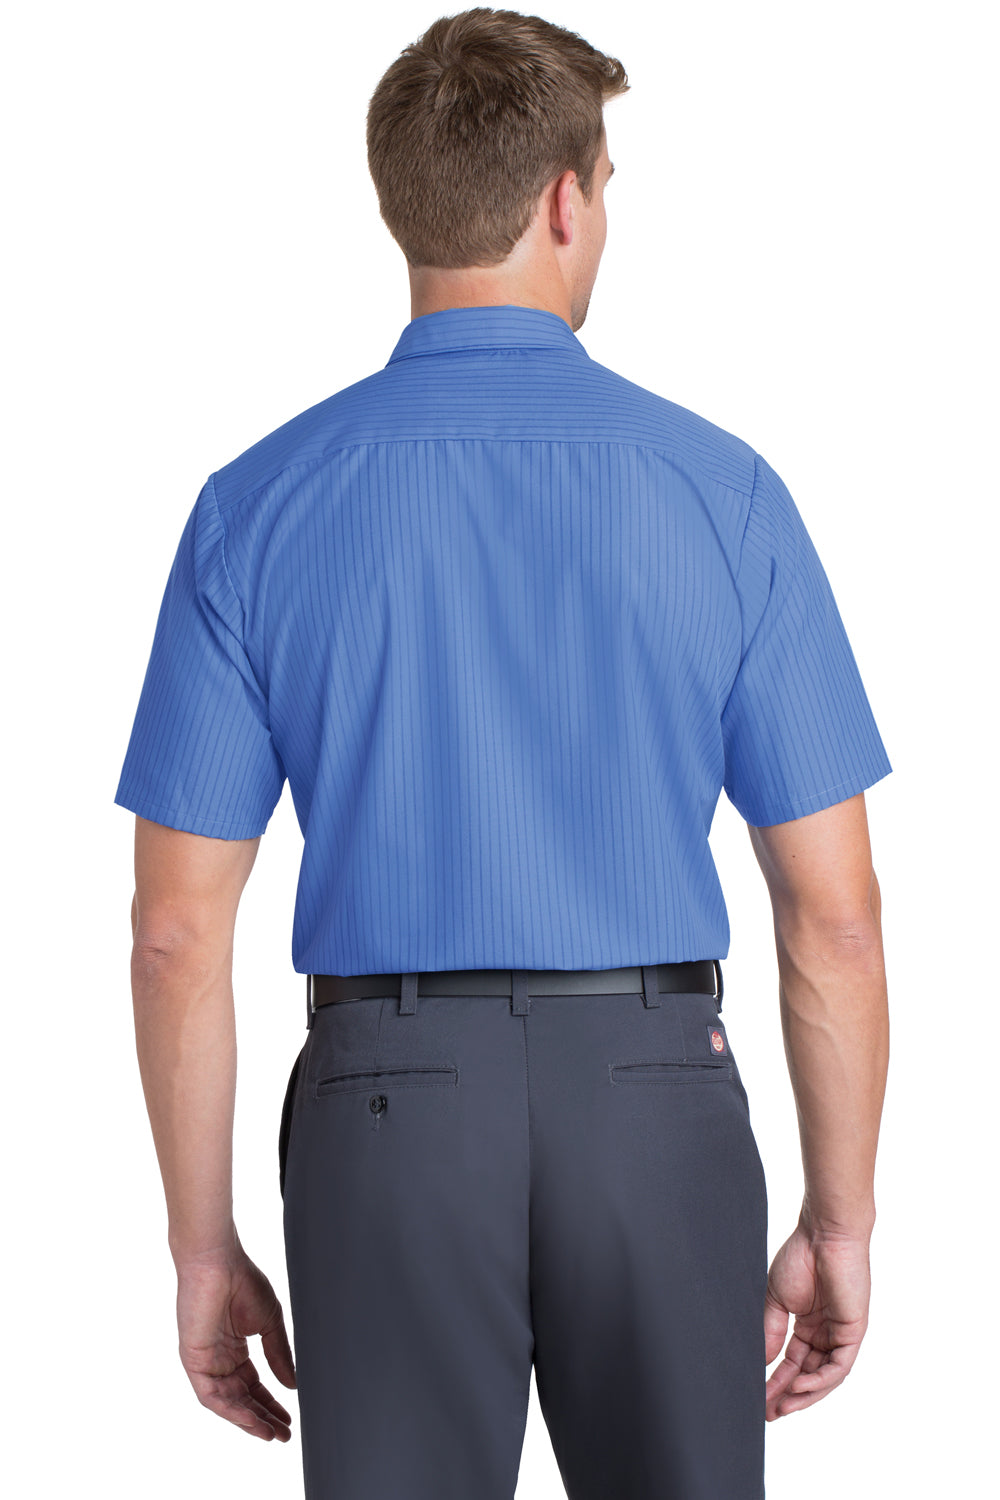 Red Kap CS20/CS20LONG Mens Industrial Moisture Wicking Short Sleeve Button Down Shirt w/ Double Pockets Petrol Blue/Navy Blue Back